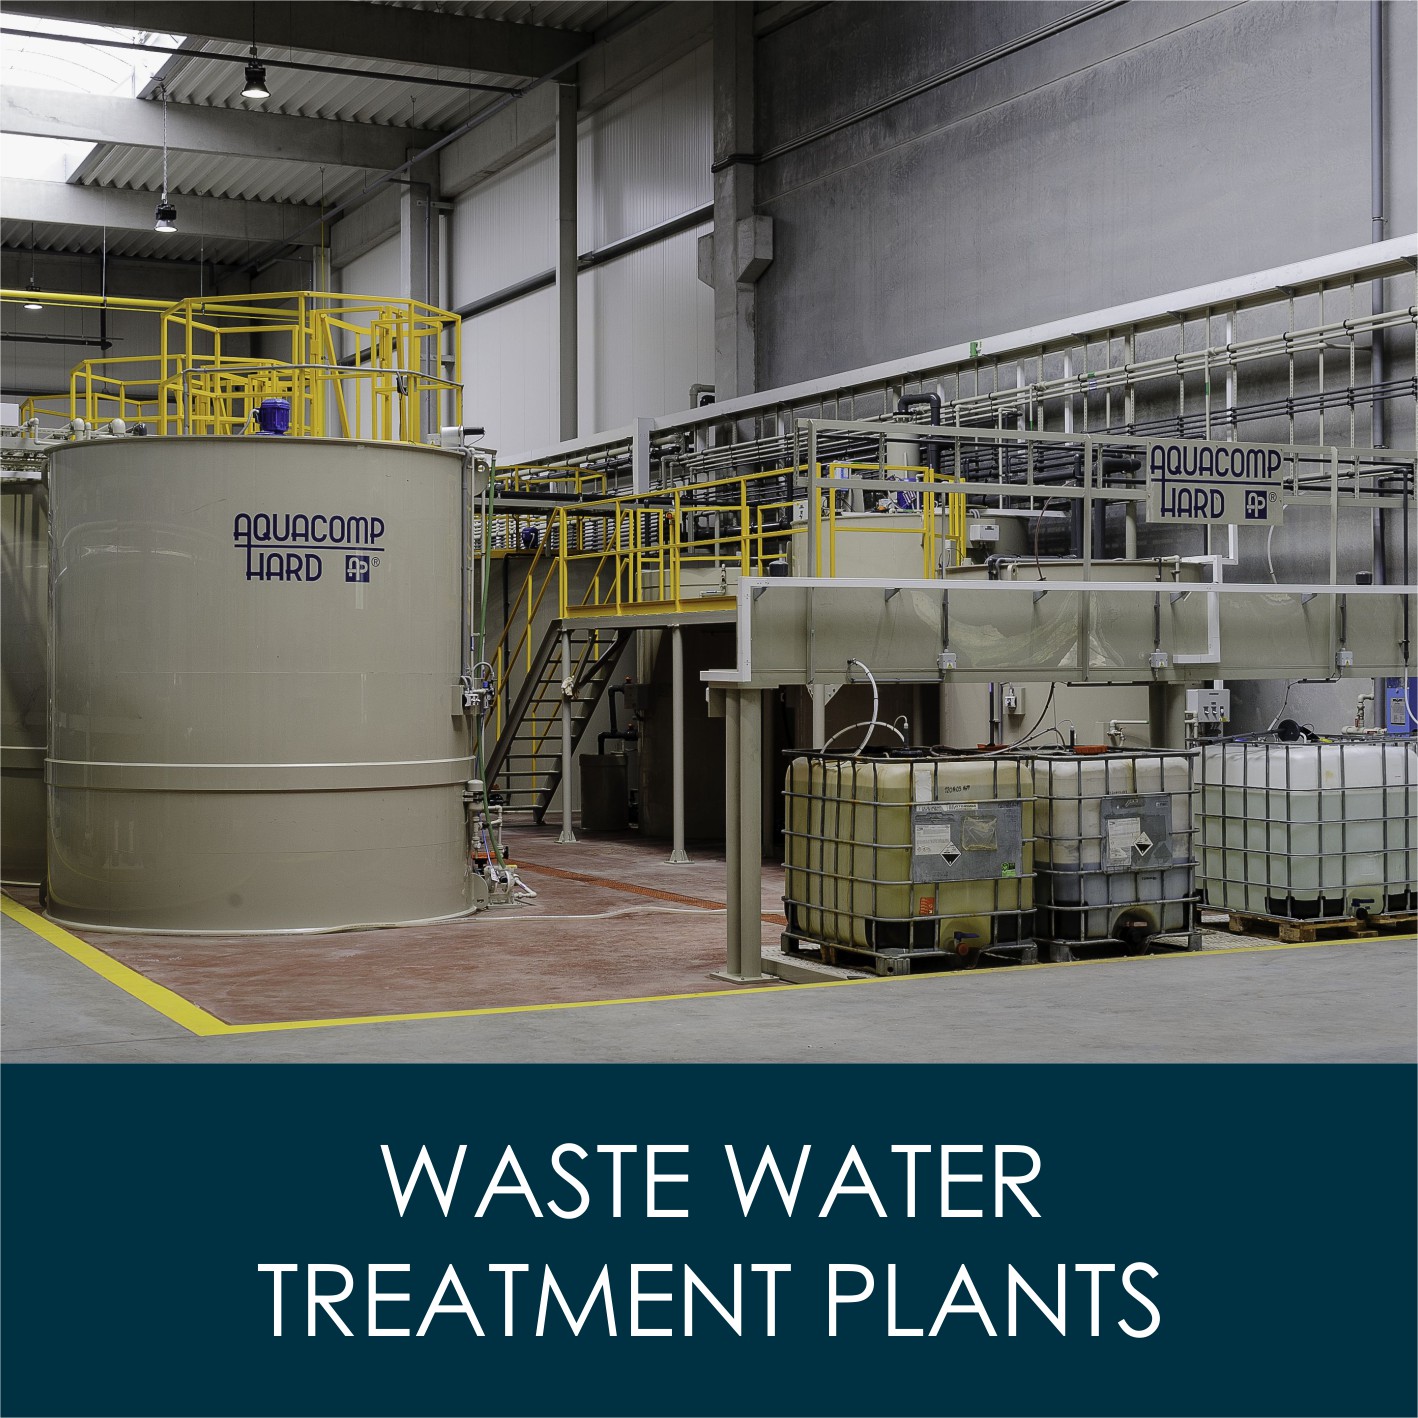 Waste water treatment plants